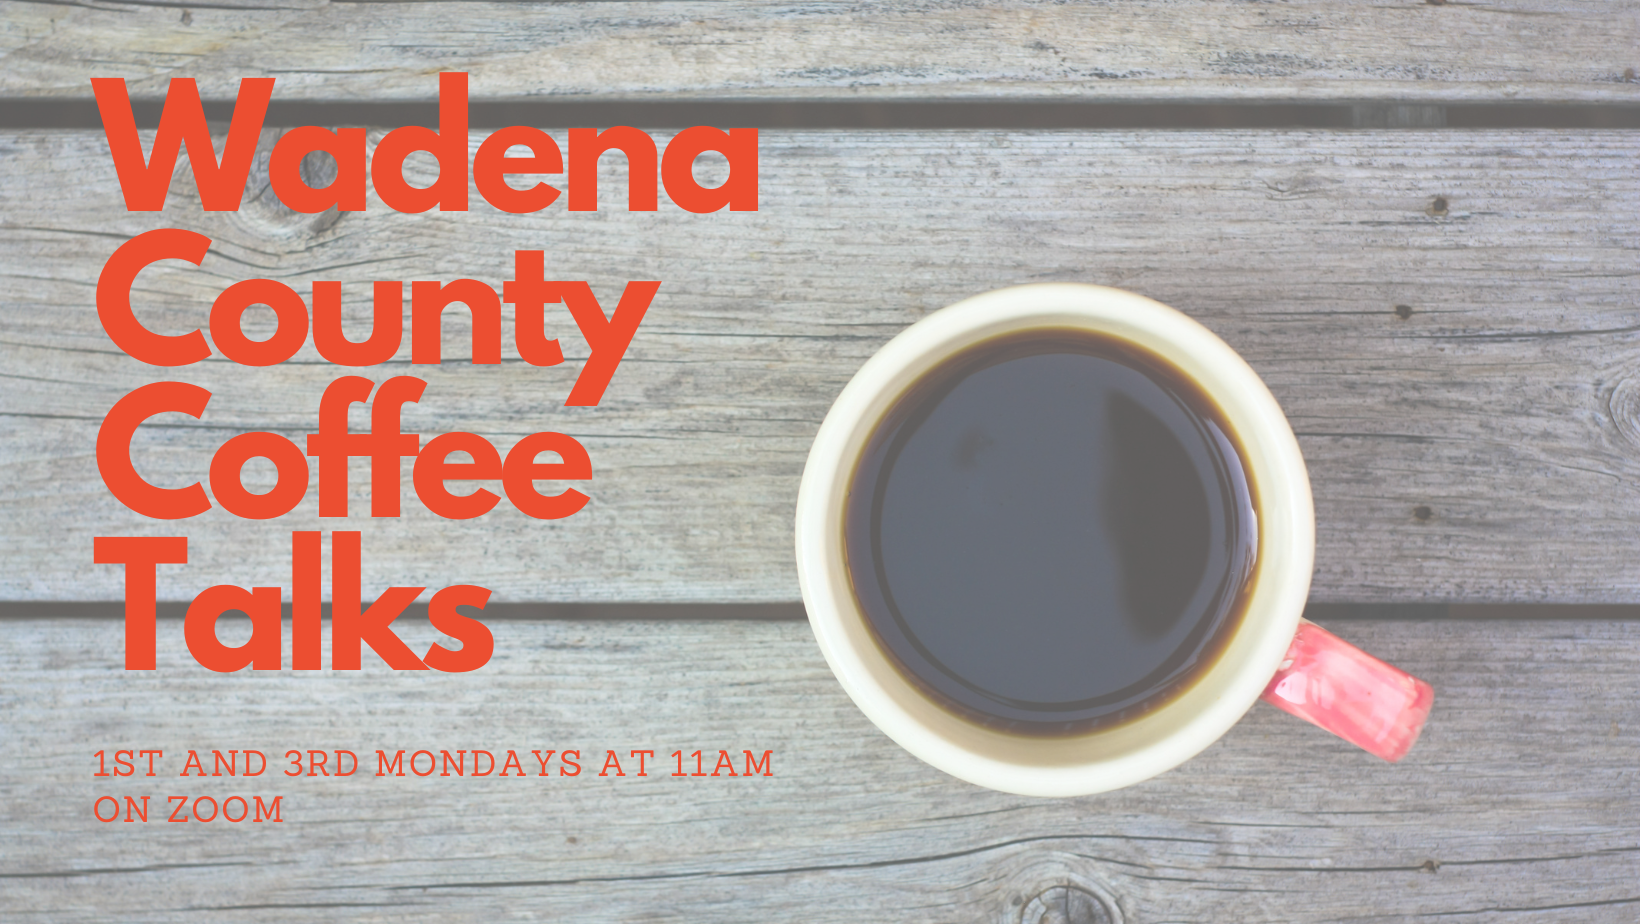 wadena county coffee talks table and coffee